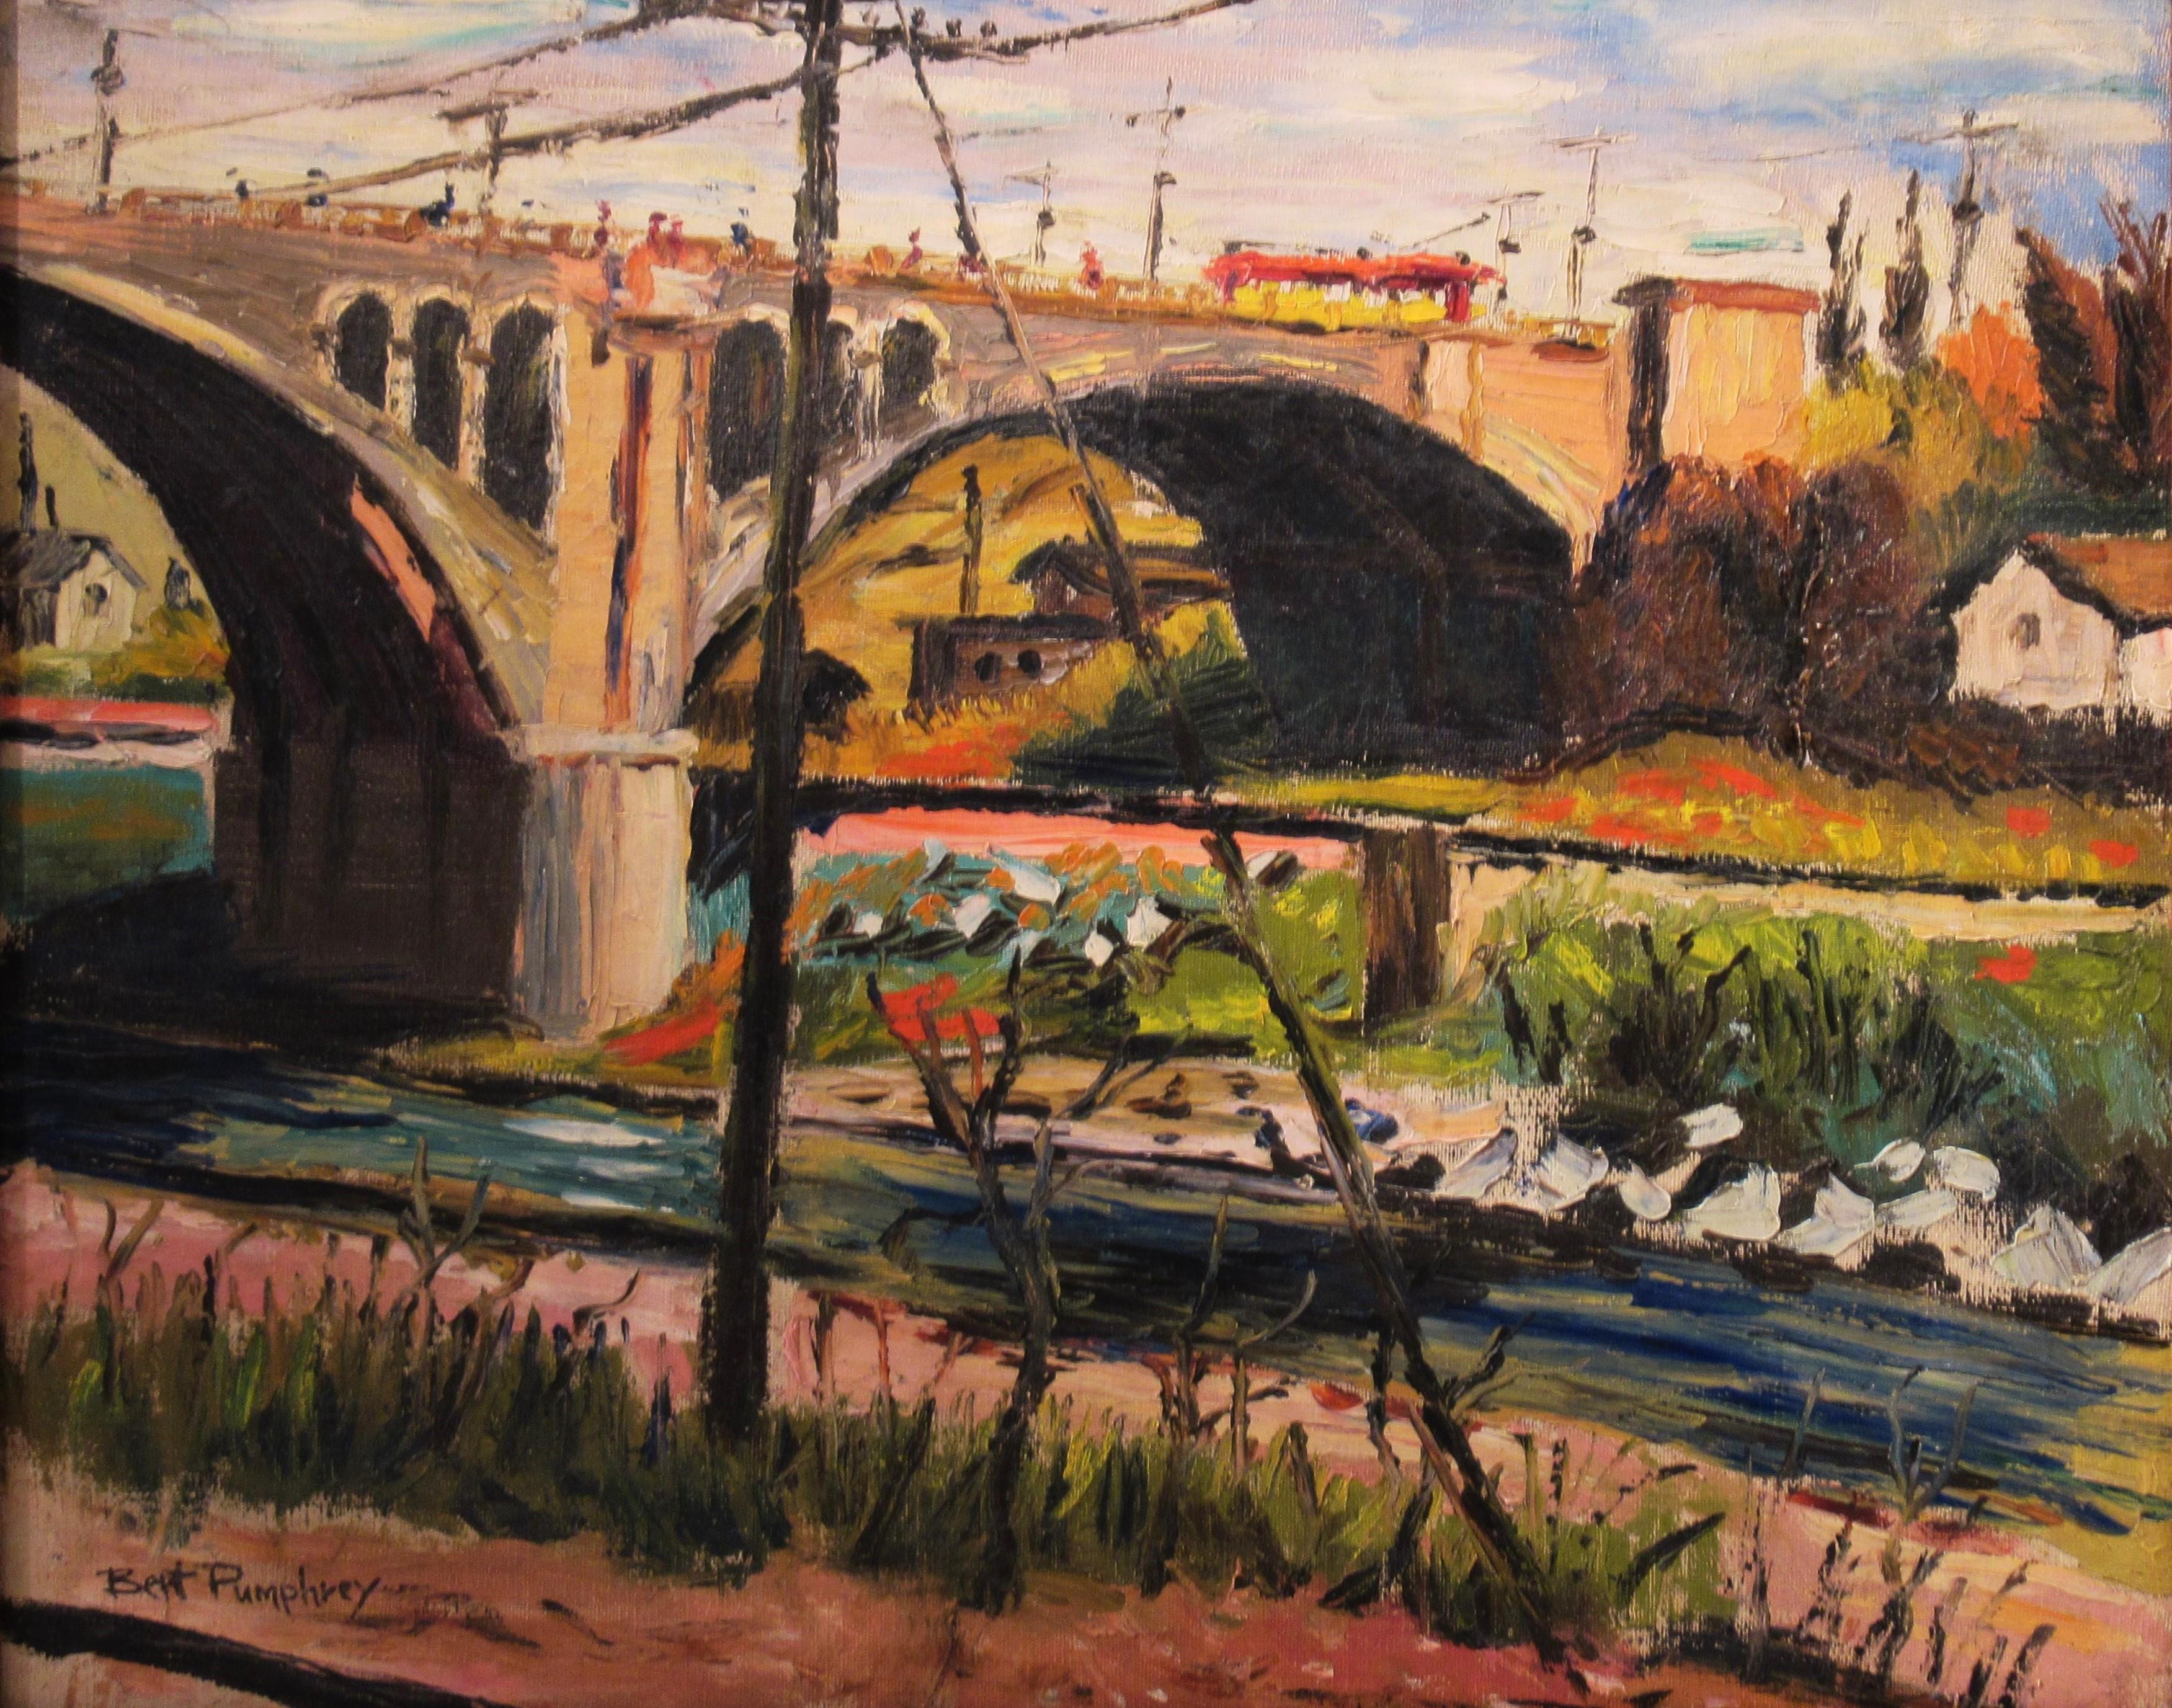 Under the Bridge - Painting by Bert Pumphrey